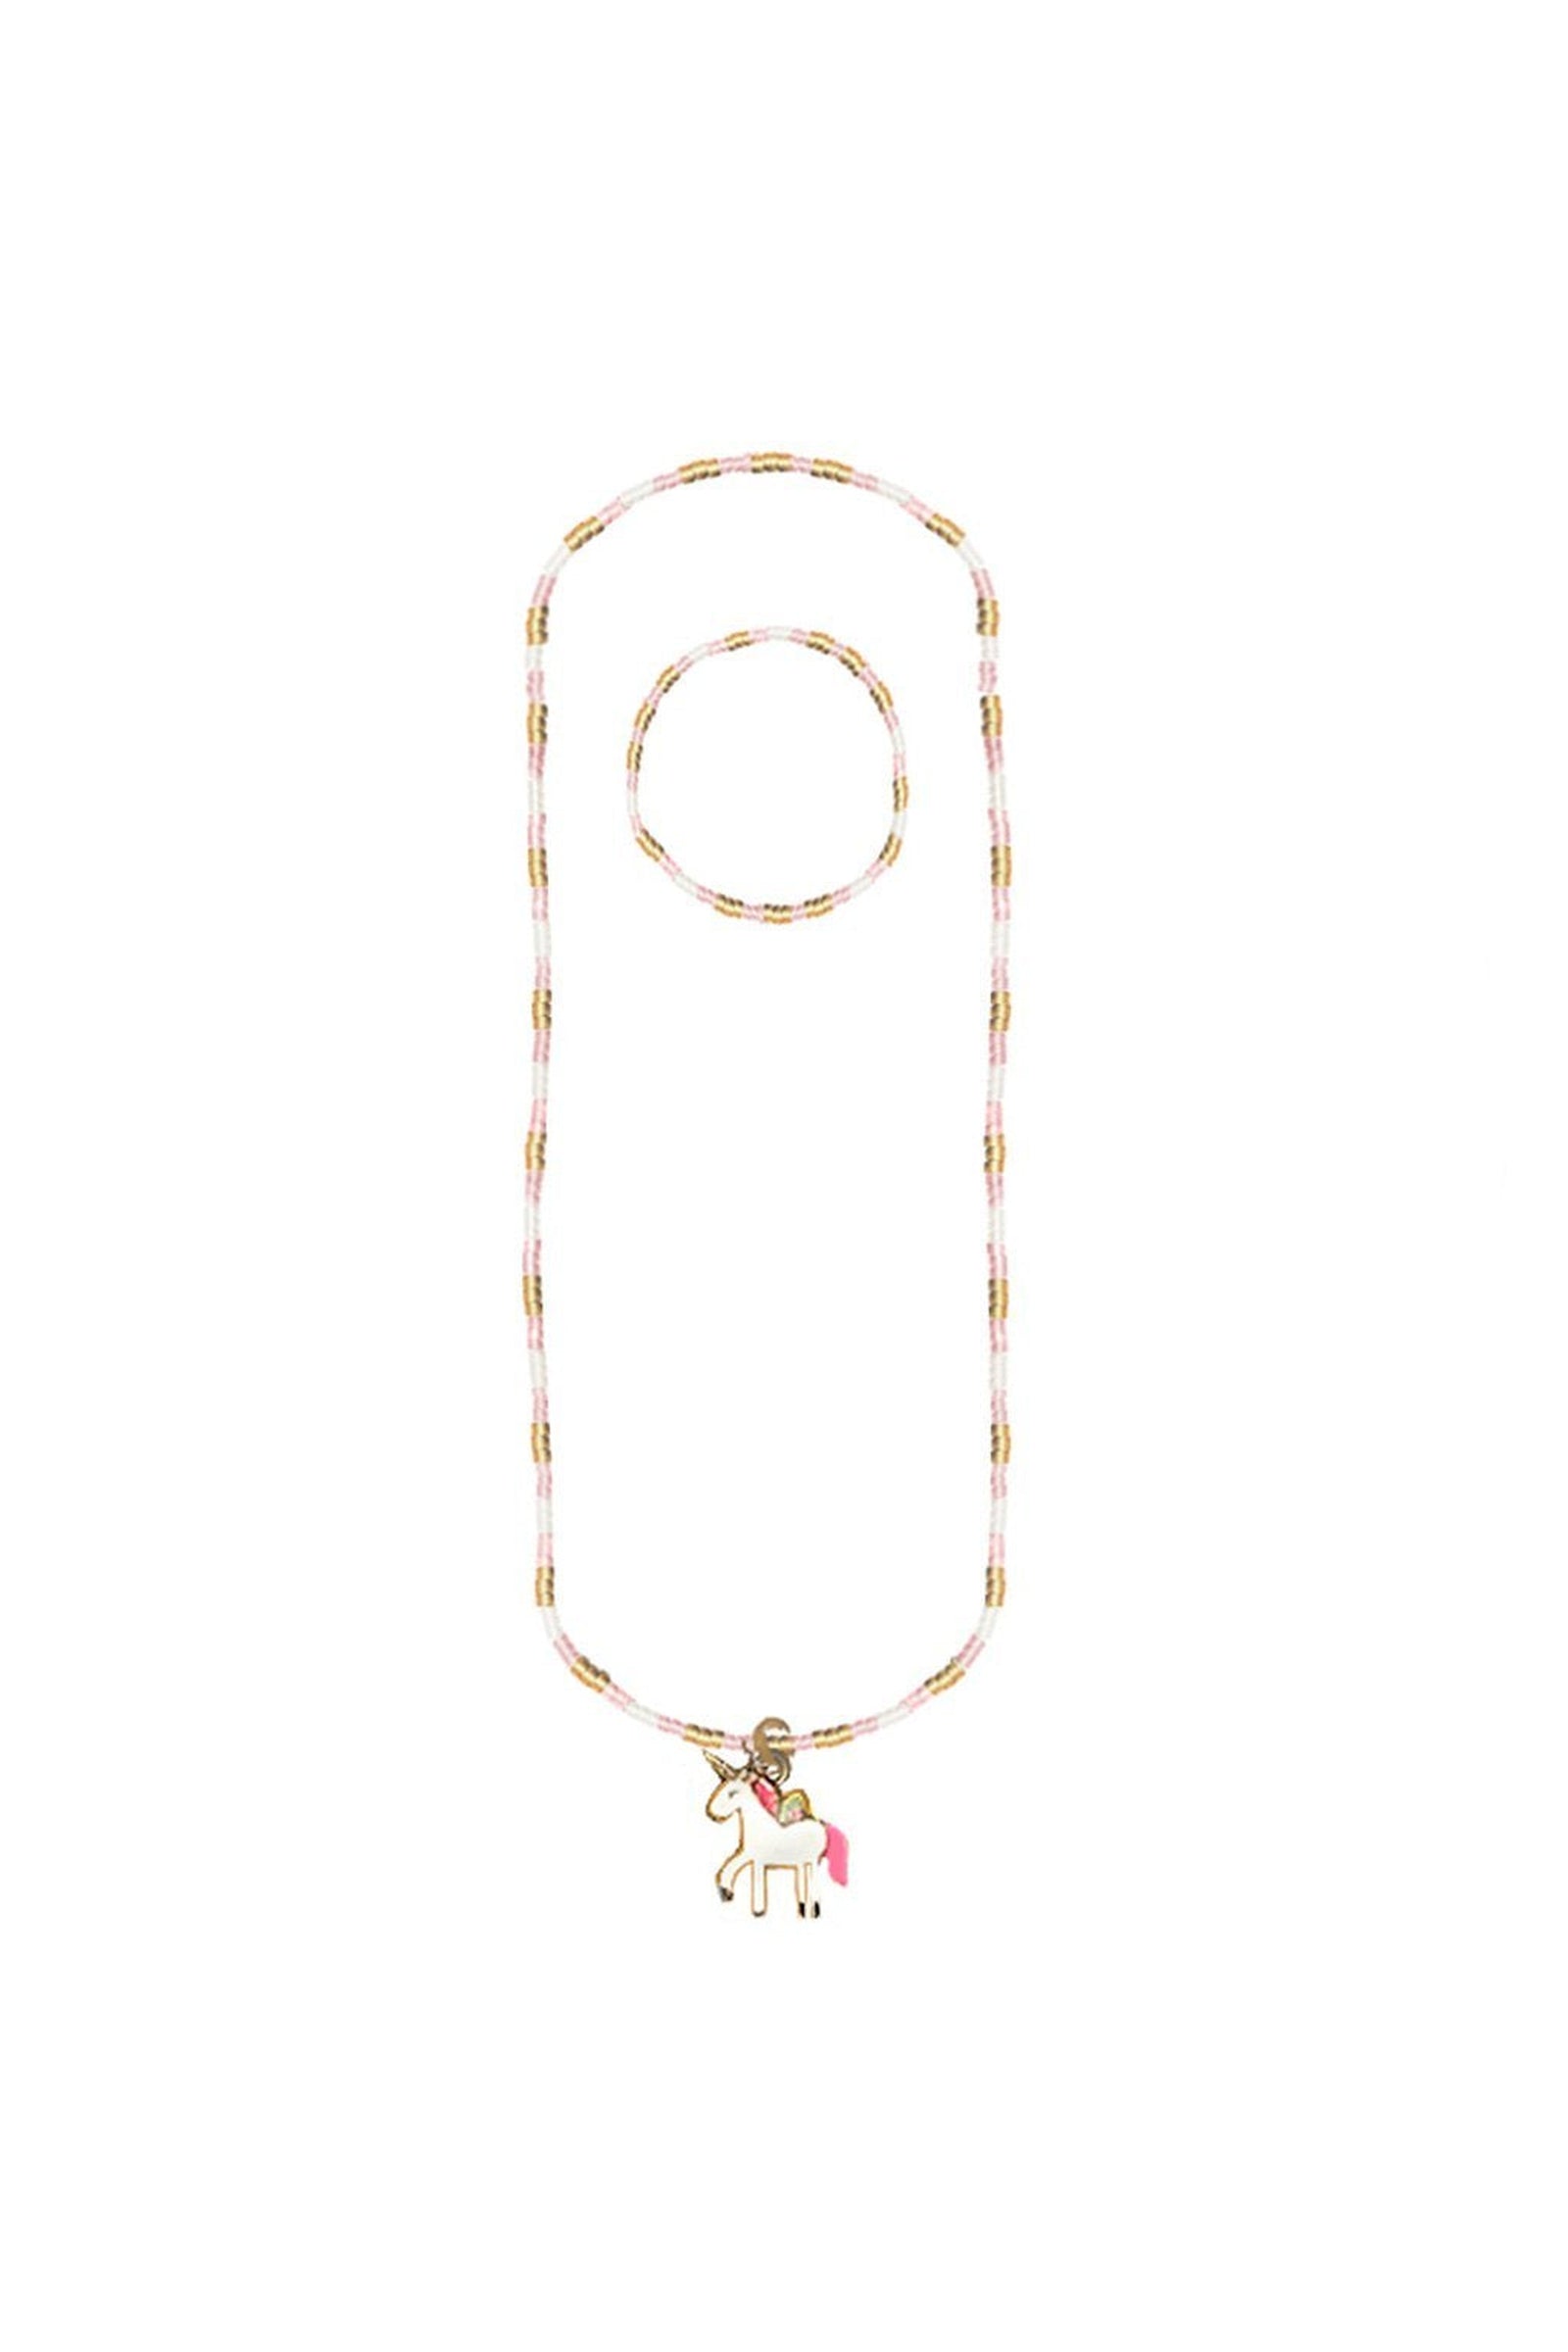 White Sparkle Unicorn Necklace and Bracelet Set-CE86125-M